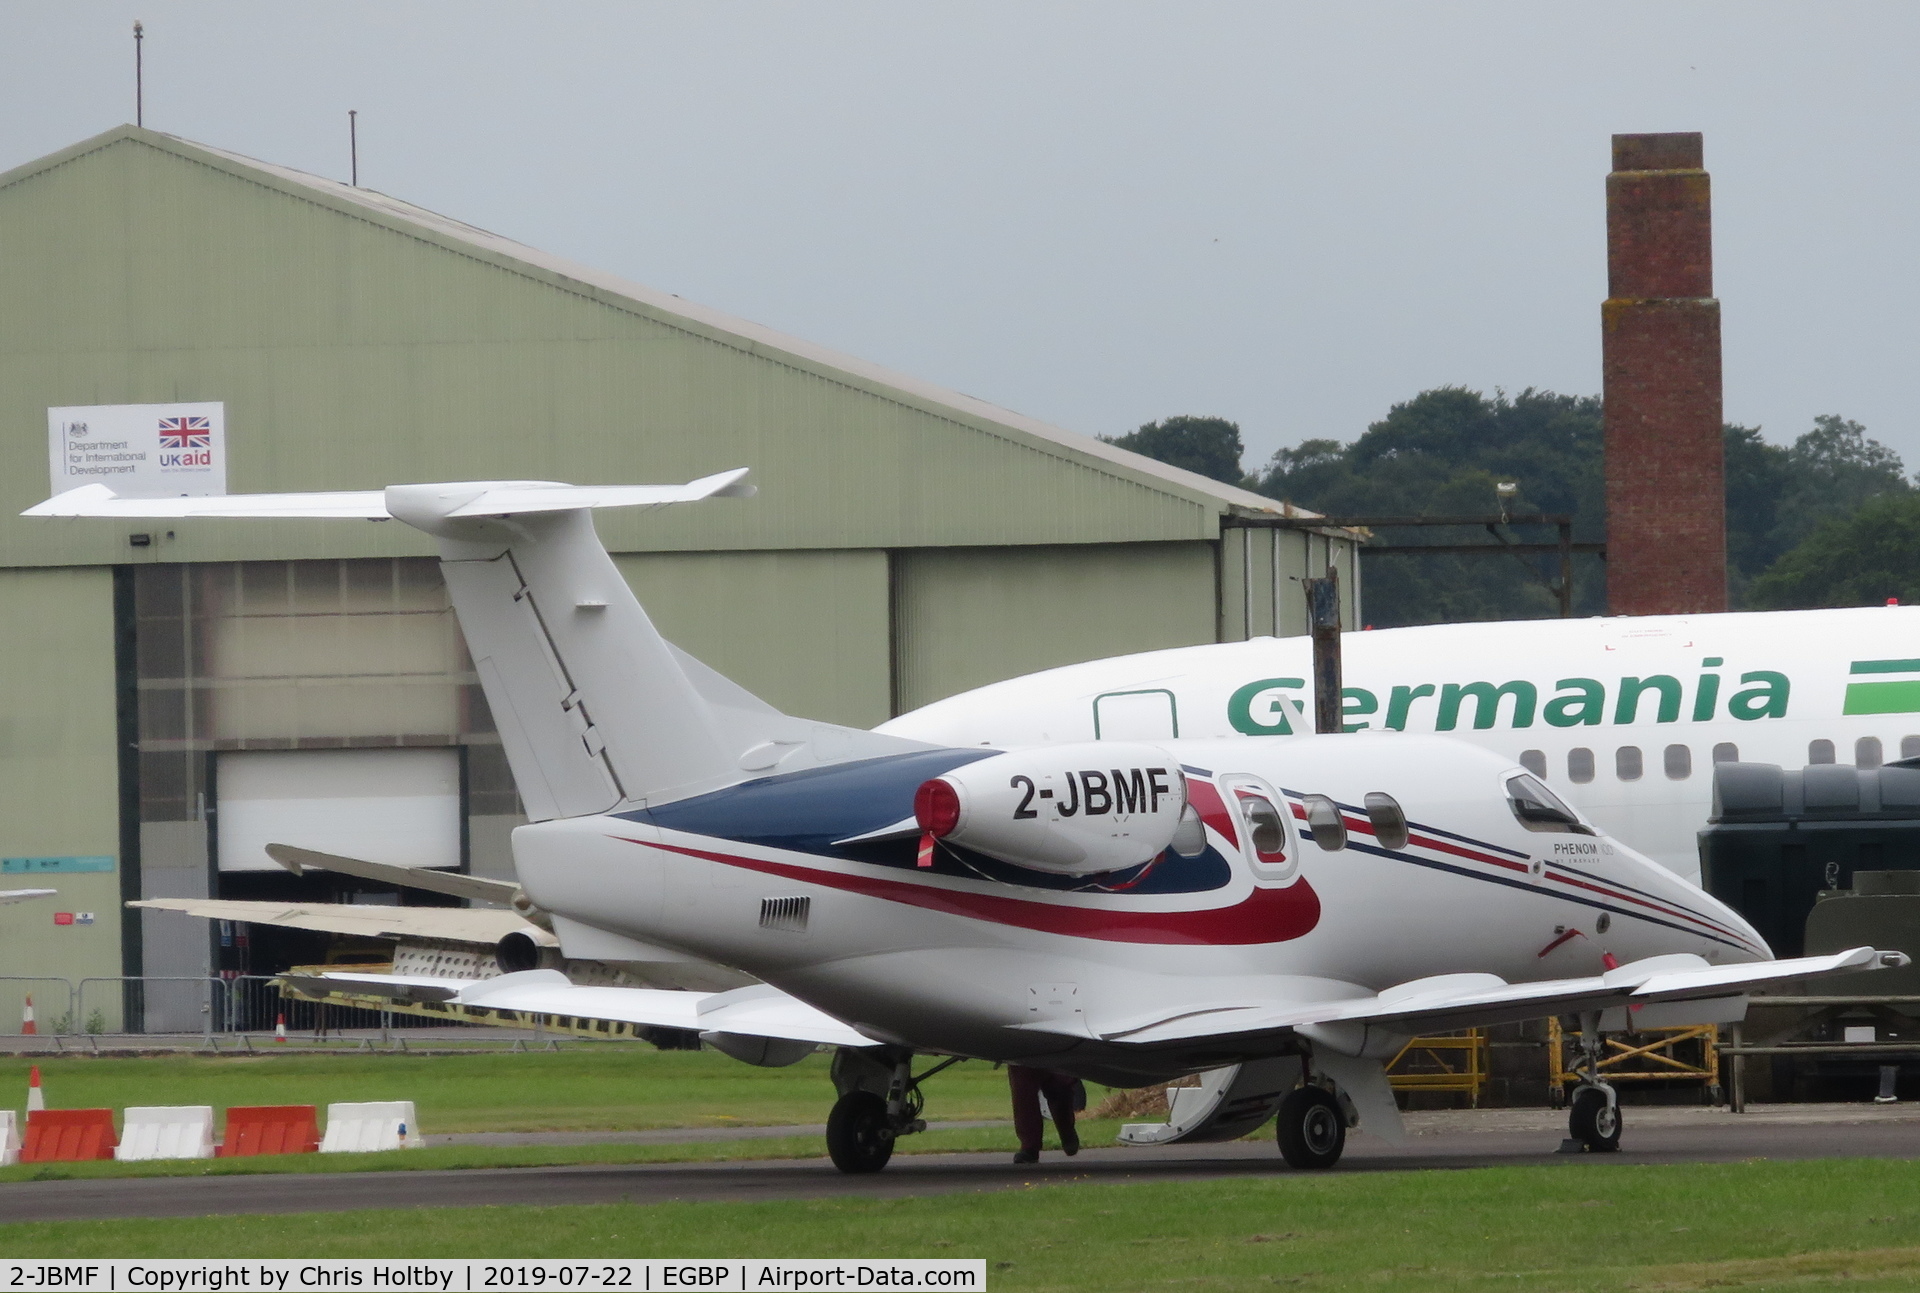 2-JBMF, 2011 Embraer EMB-500 Phenom 100 C/N 50000250, Parked at Kemble